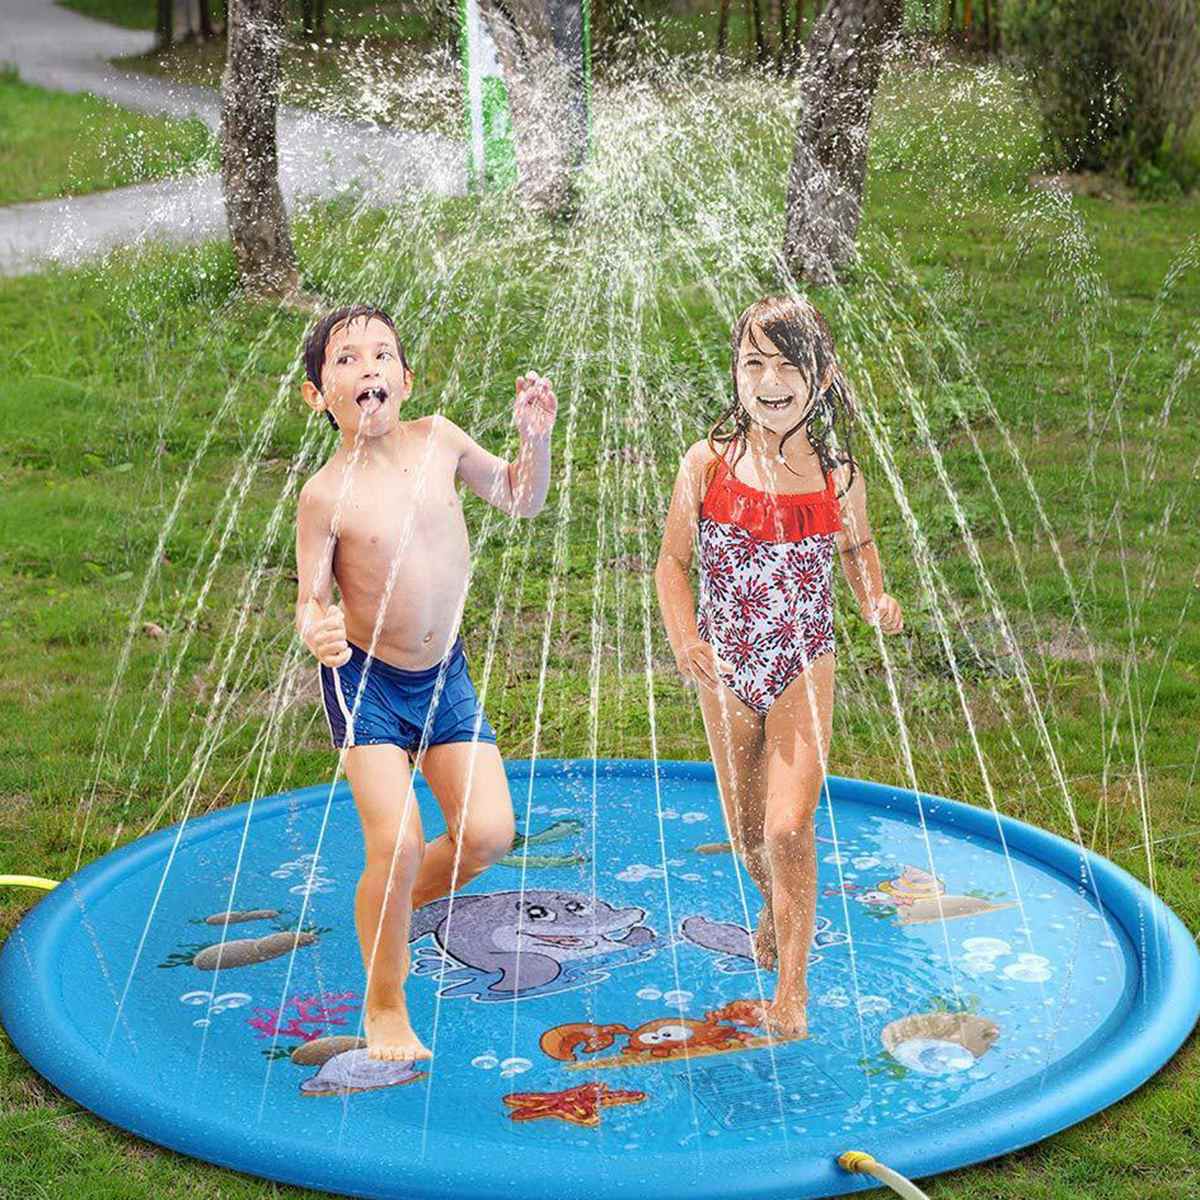 Water Sprinkler for Kids Inflatable Play Pool